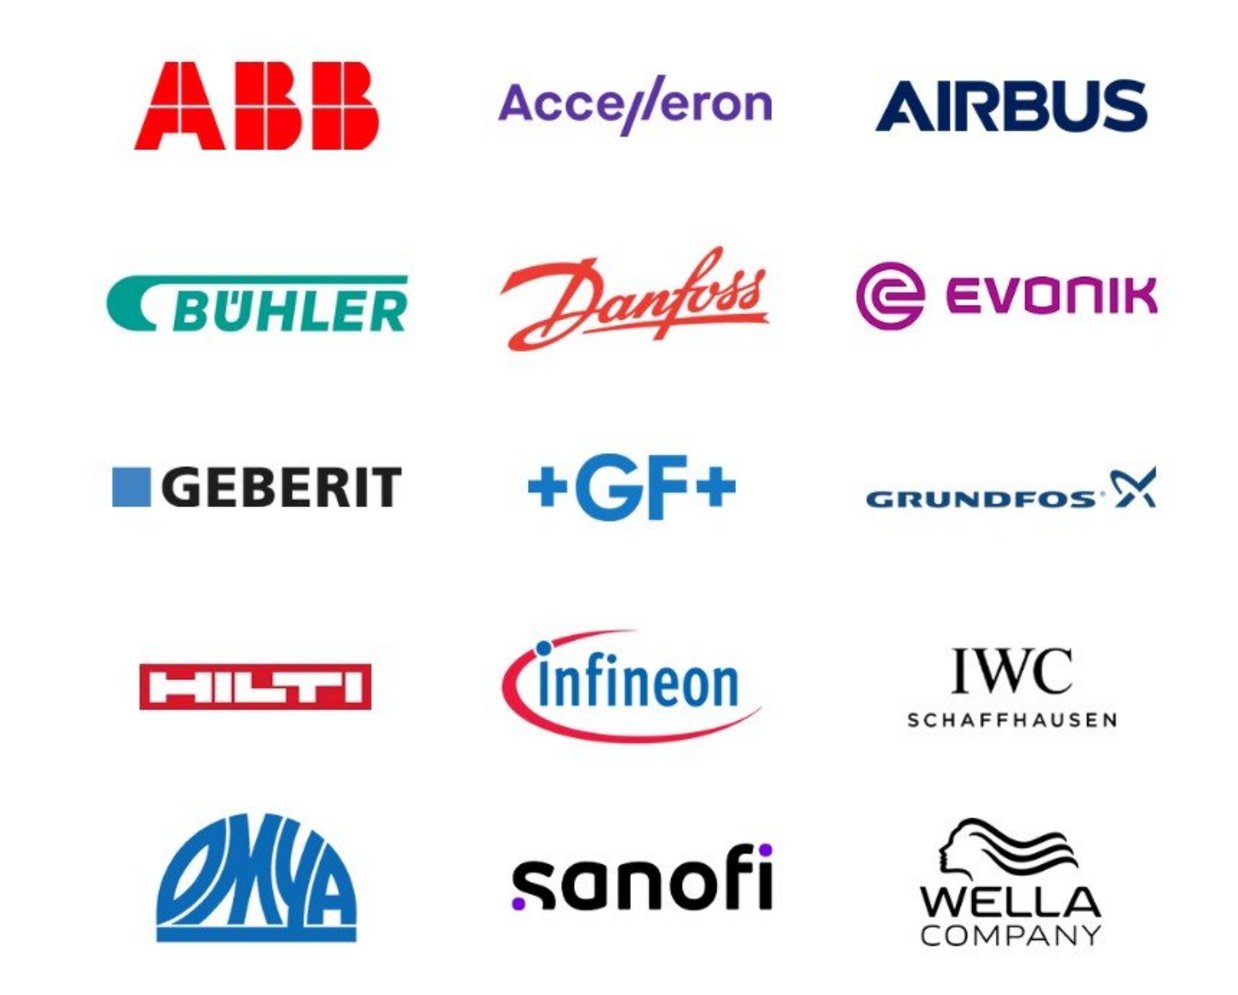 ABB - Accelleron - Airbus - Buhler - Danfoss - Evonik - Geberit - GF - Grundfos - Hilti - Infineon - IWC Schaffhausen - Nouryon - Sanofi - Wella class=